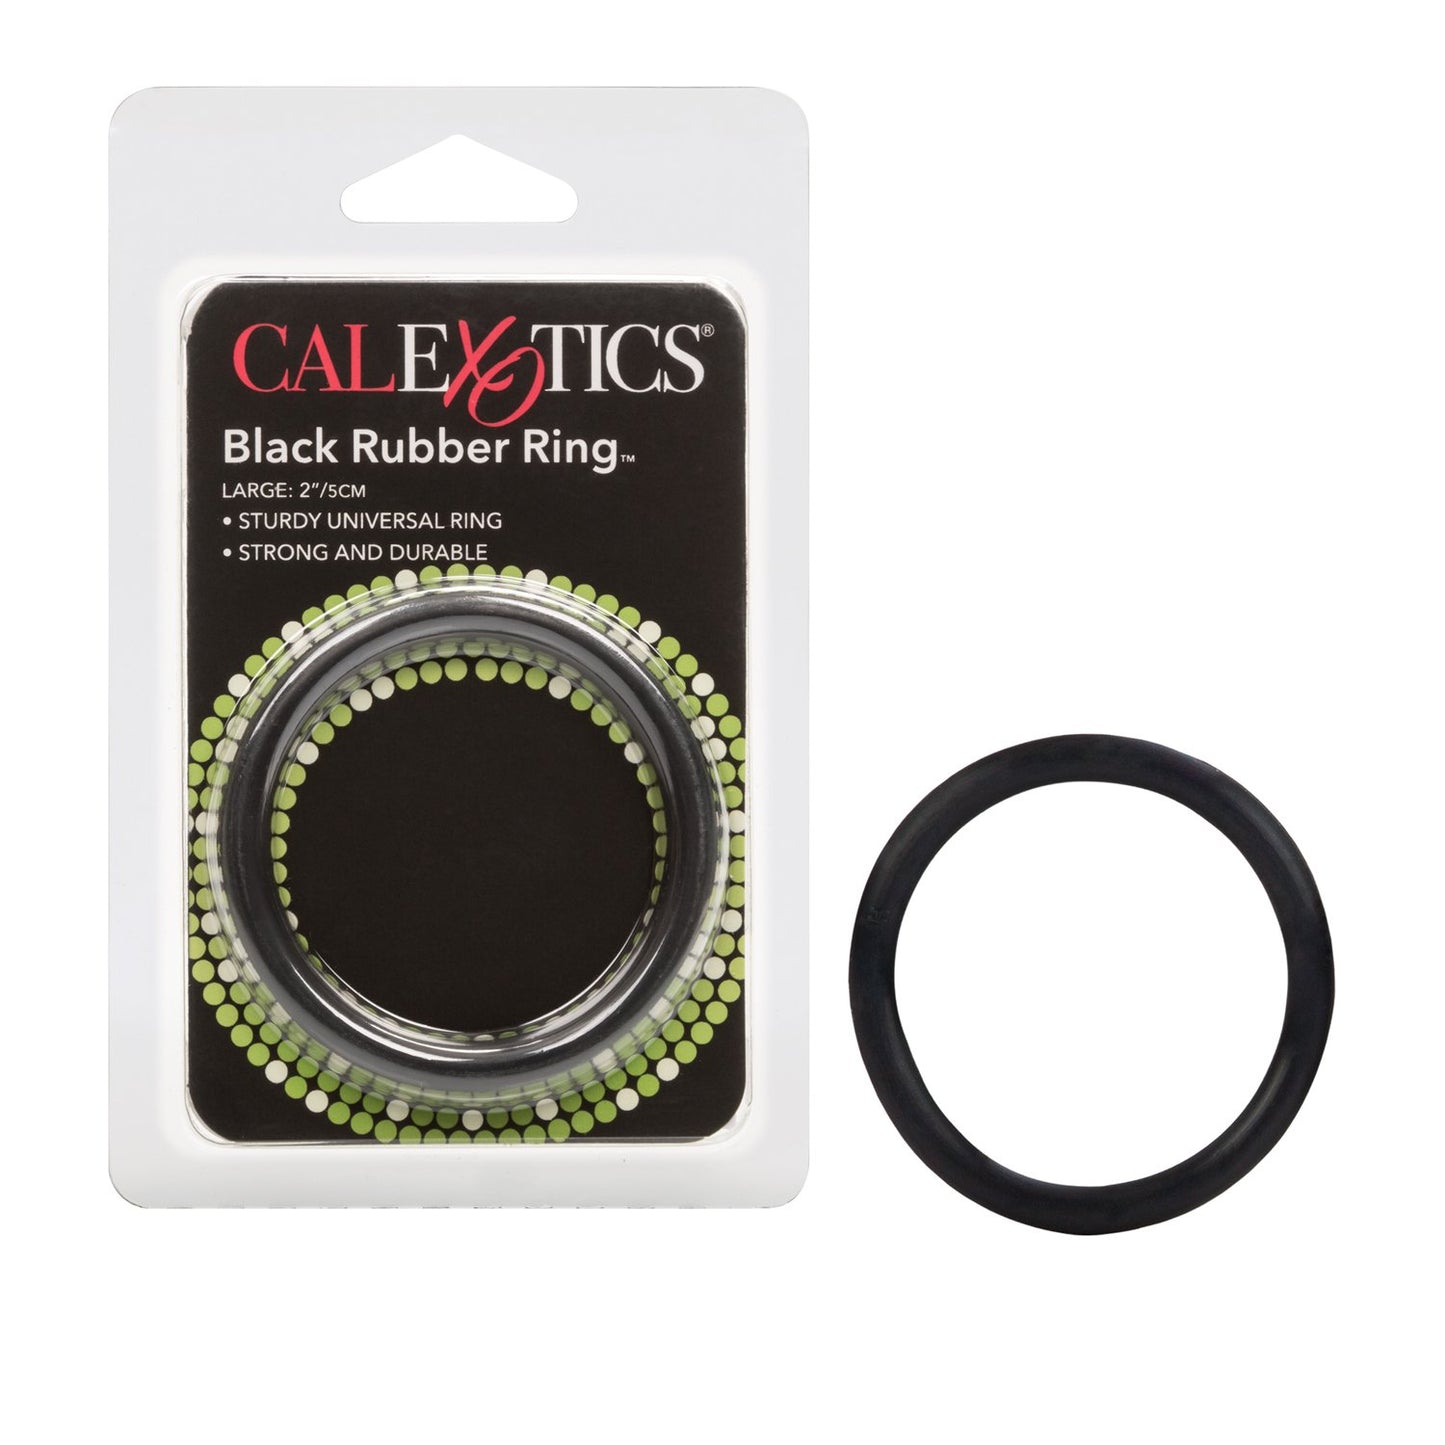 Black Rubber Ring Set